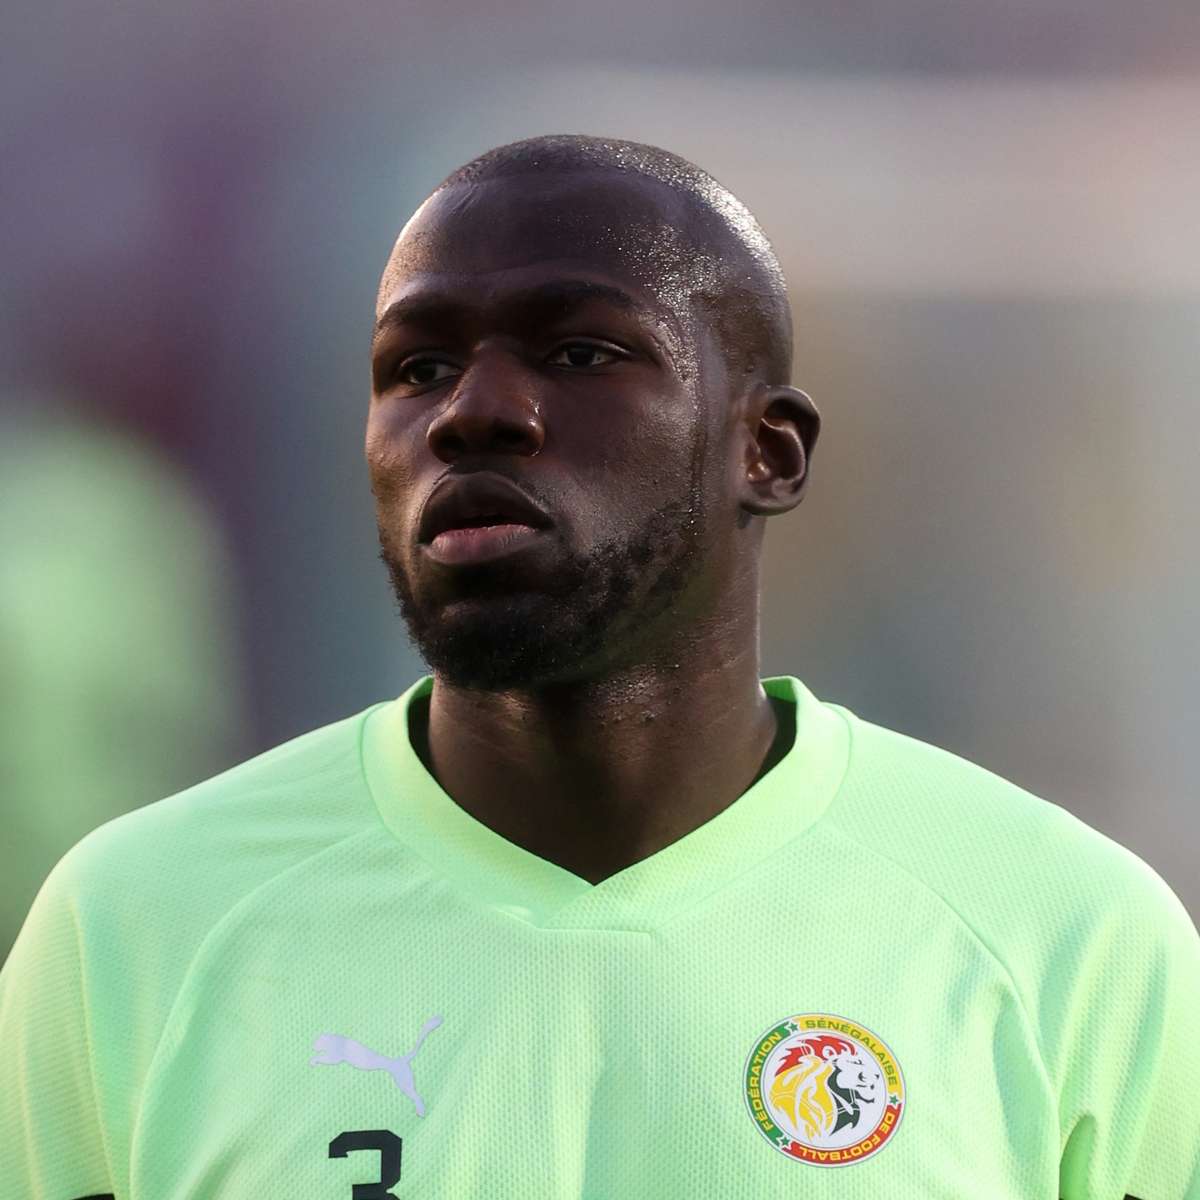 Zagueiro de Senegal explica baque após corte de Mané: 